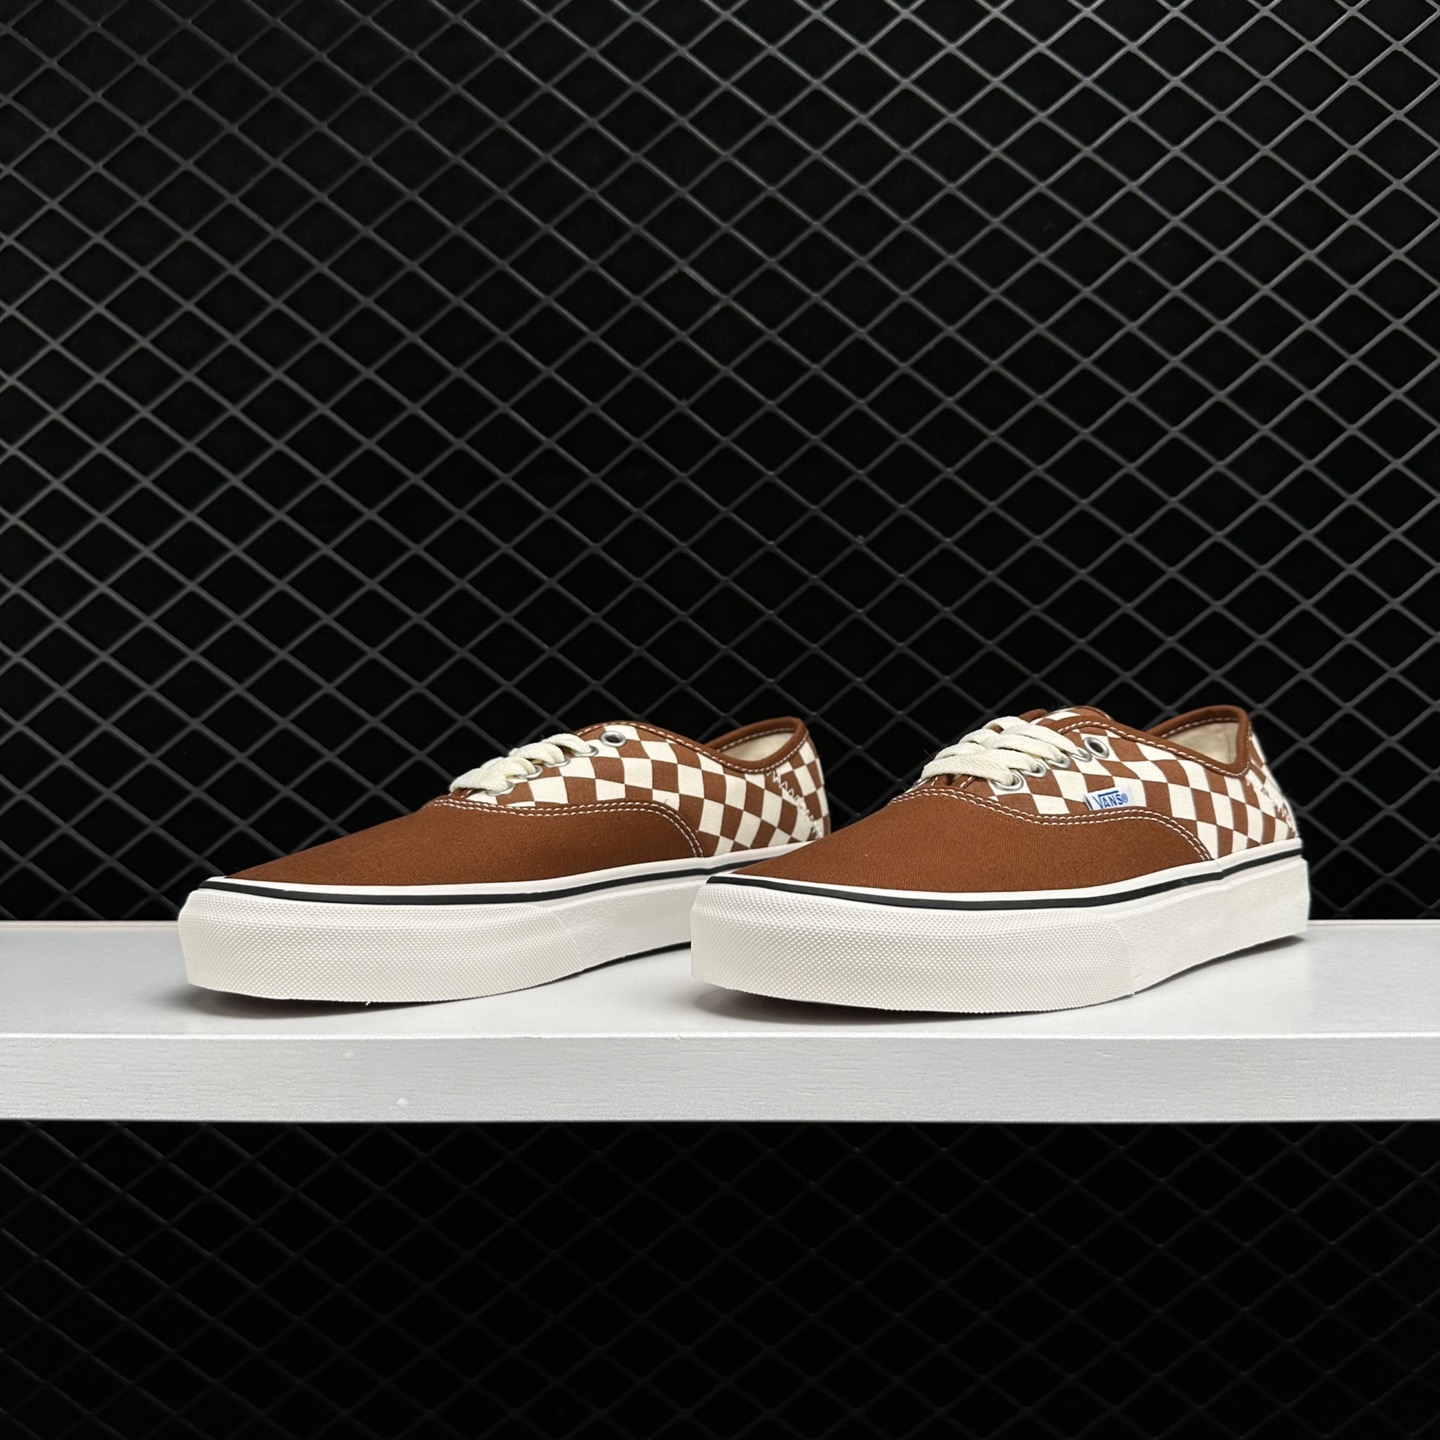 Vans Authentic Low Tops Brown White Skate Shoes Unisex - VN0A5HYPAXS